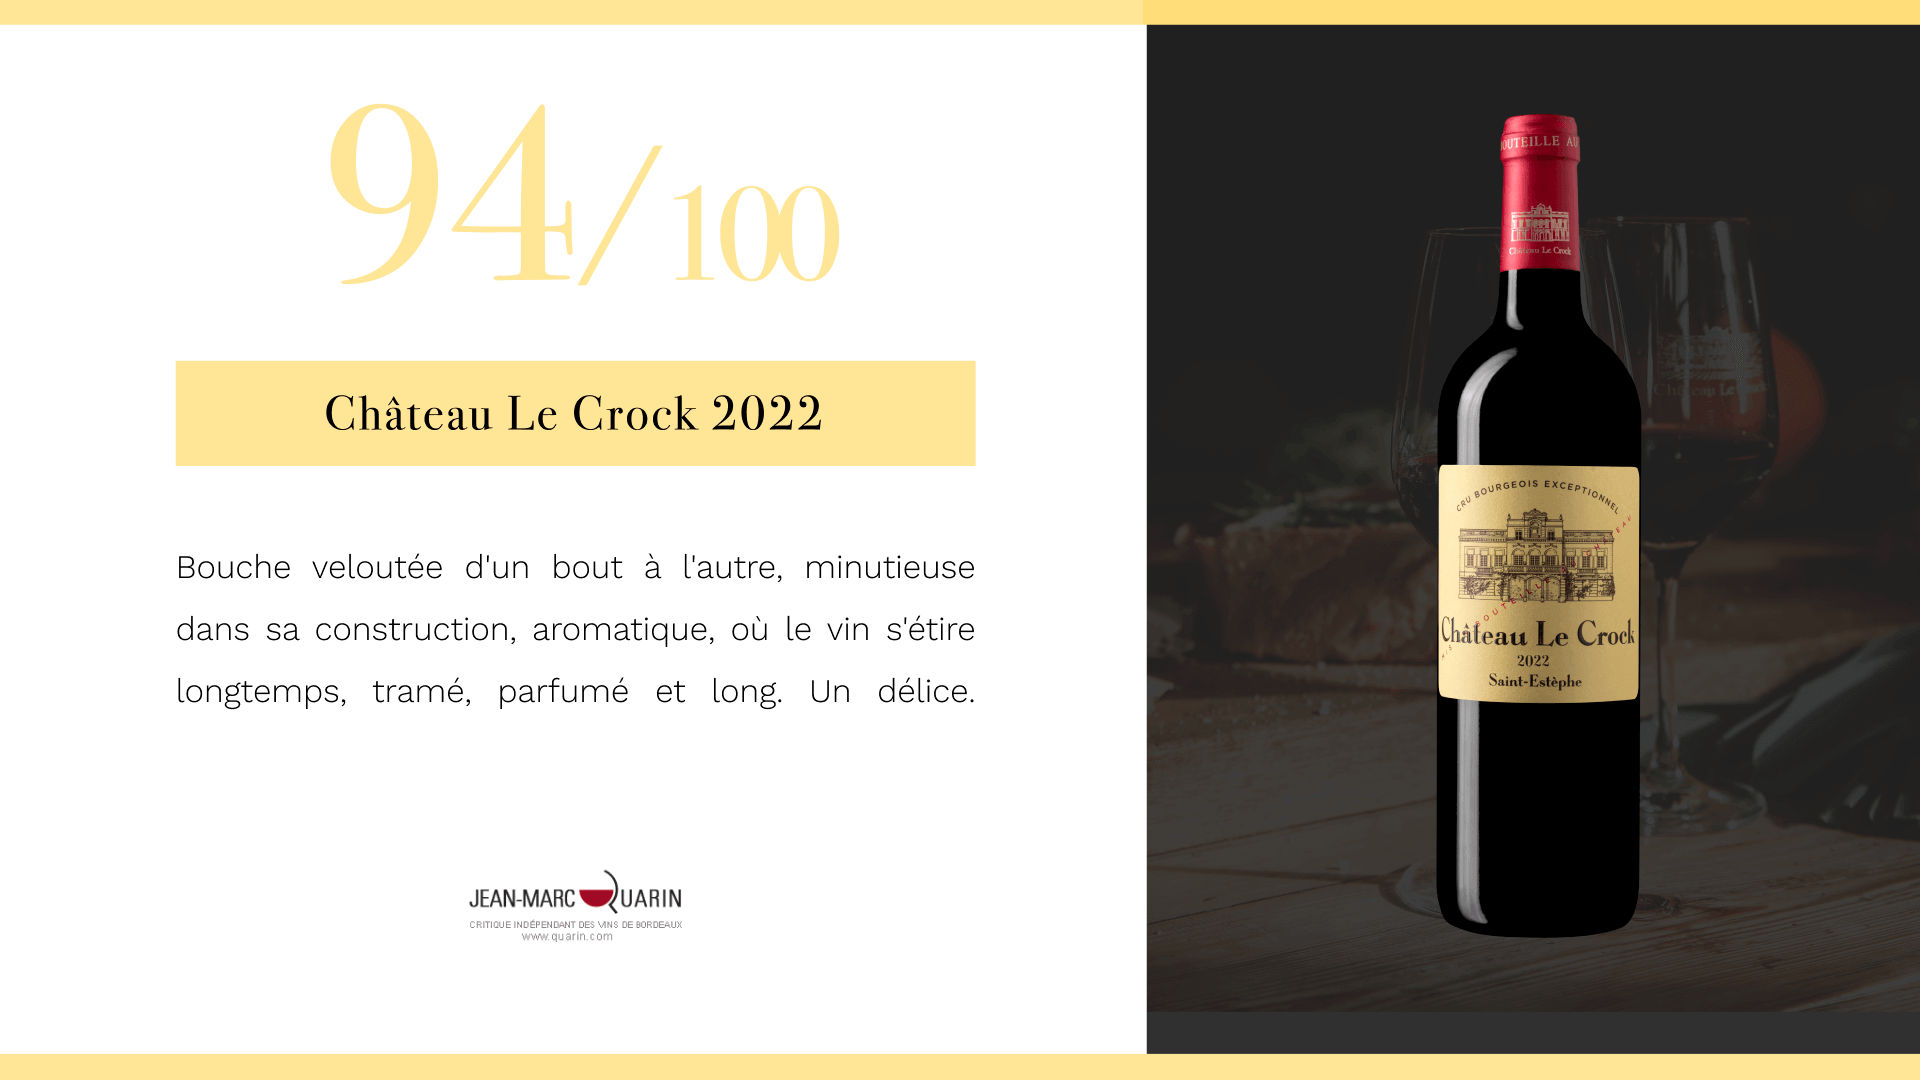 2022: an unparalleled vintage - Chateau Le Crock